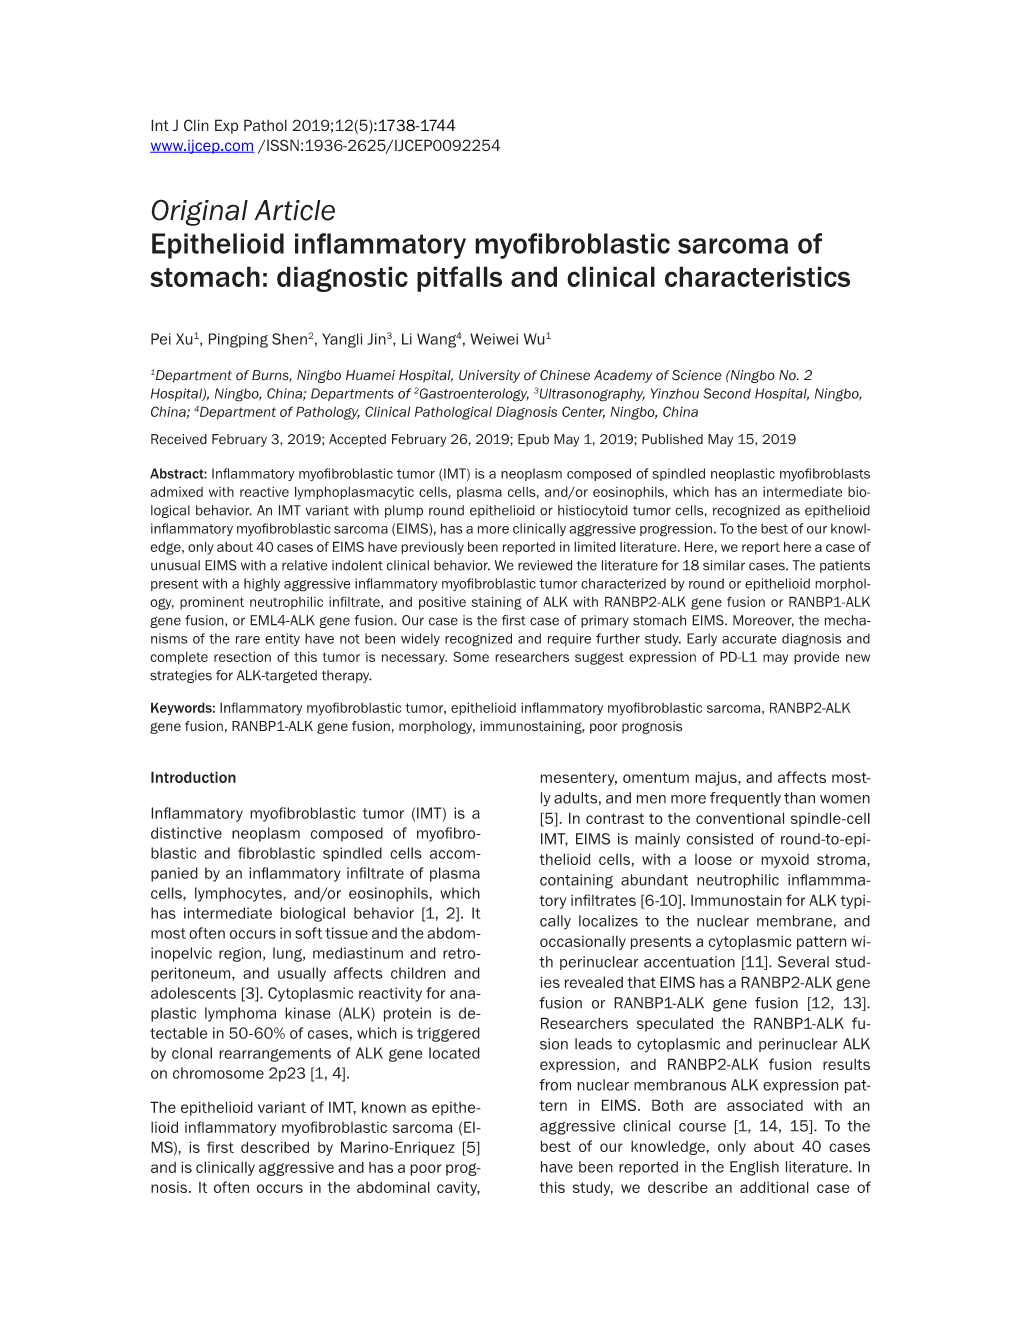 Original Article Epithelioid Inflammatory Myofibroblastic Sarcoma of Stomach: Diagnostic Pitfalls and Clinical Characteristics